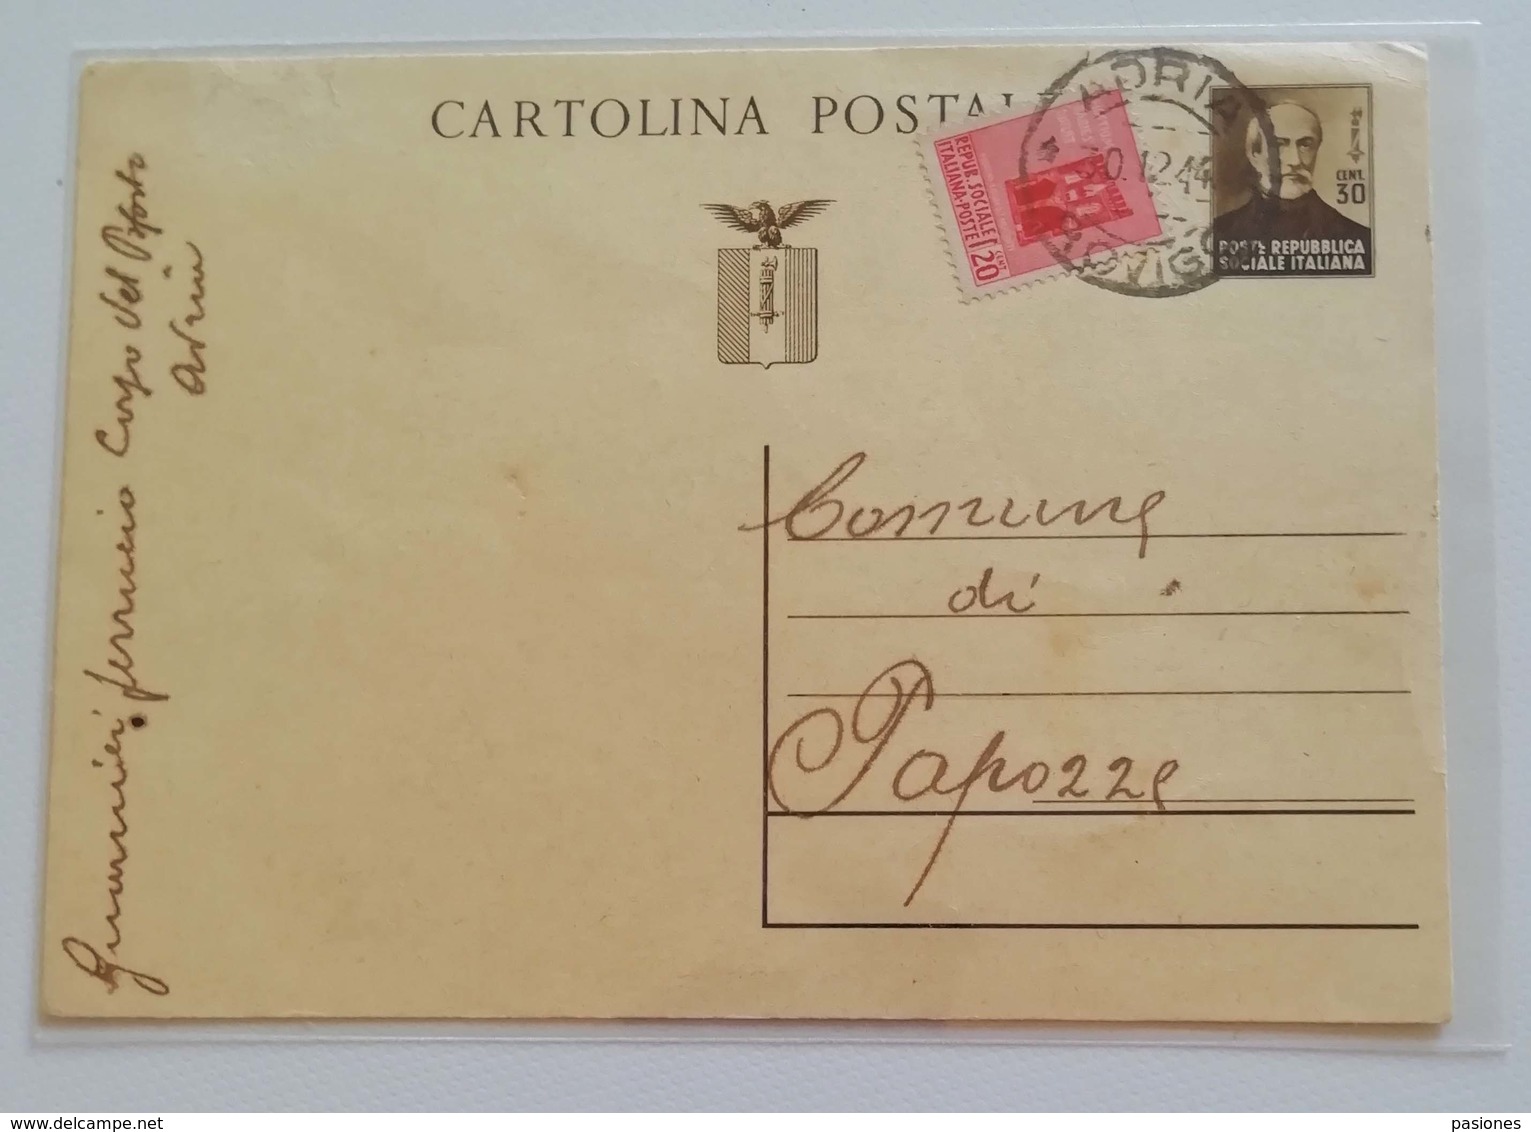 Cartolina Postale Adria-Papozze, 30/12/1944 (uso Nel Distretto) - Entiers Postaux